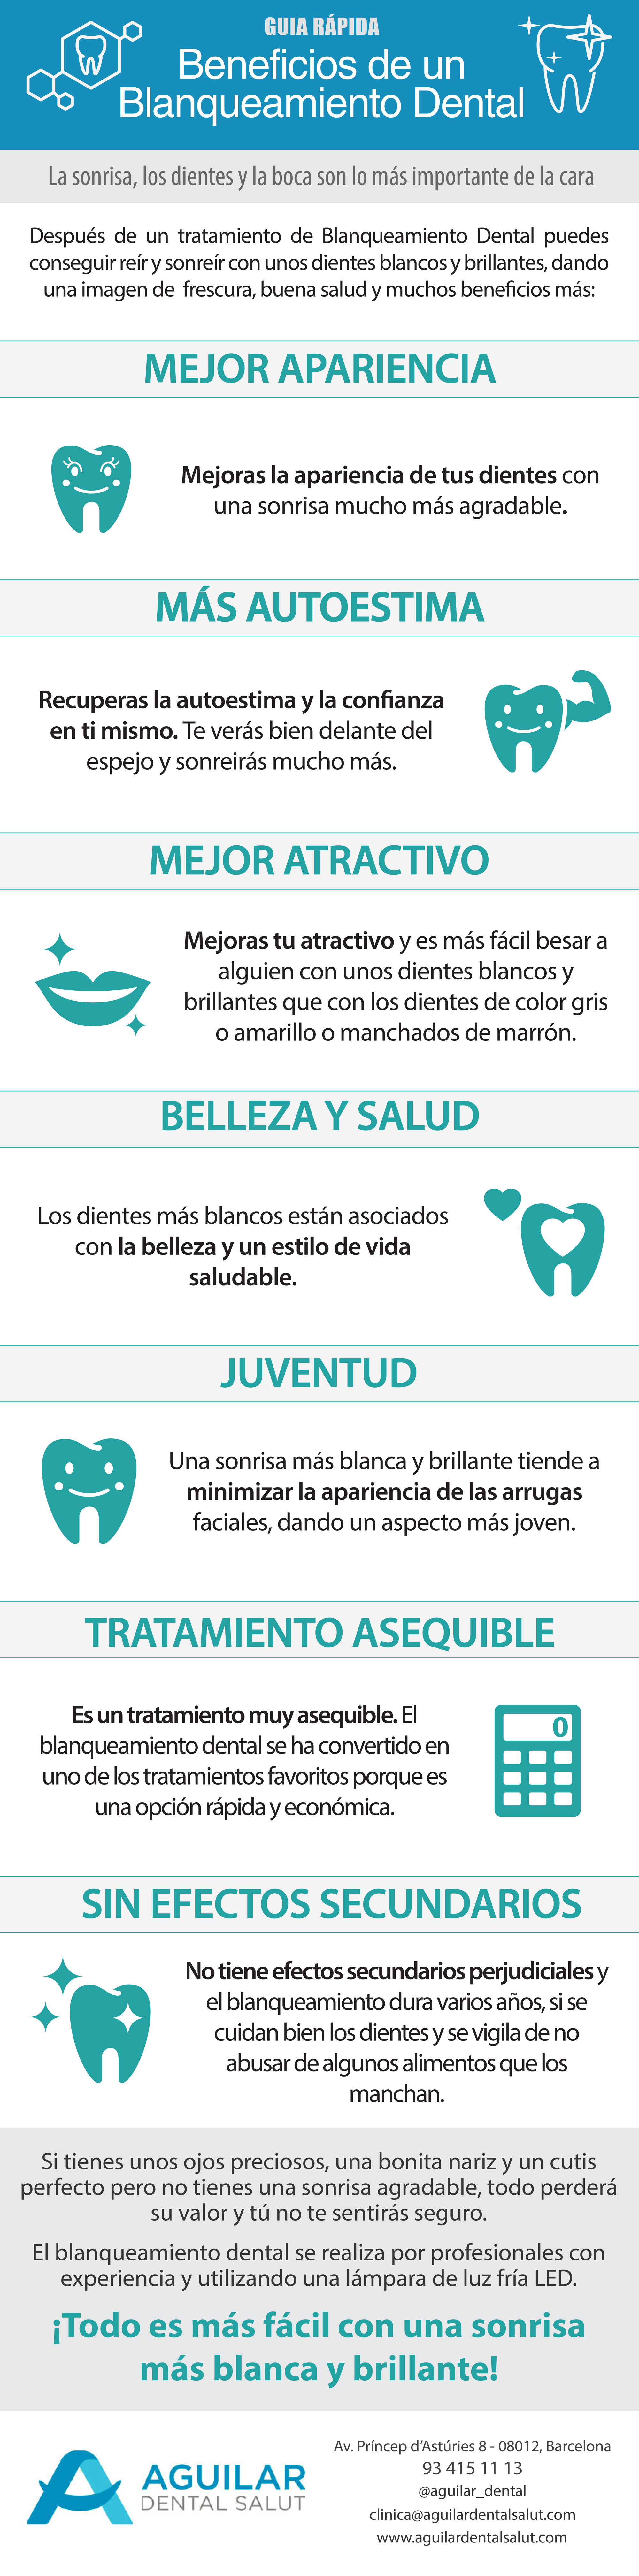 infografia-web-blanqueamiento-dental-2